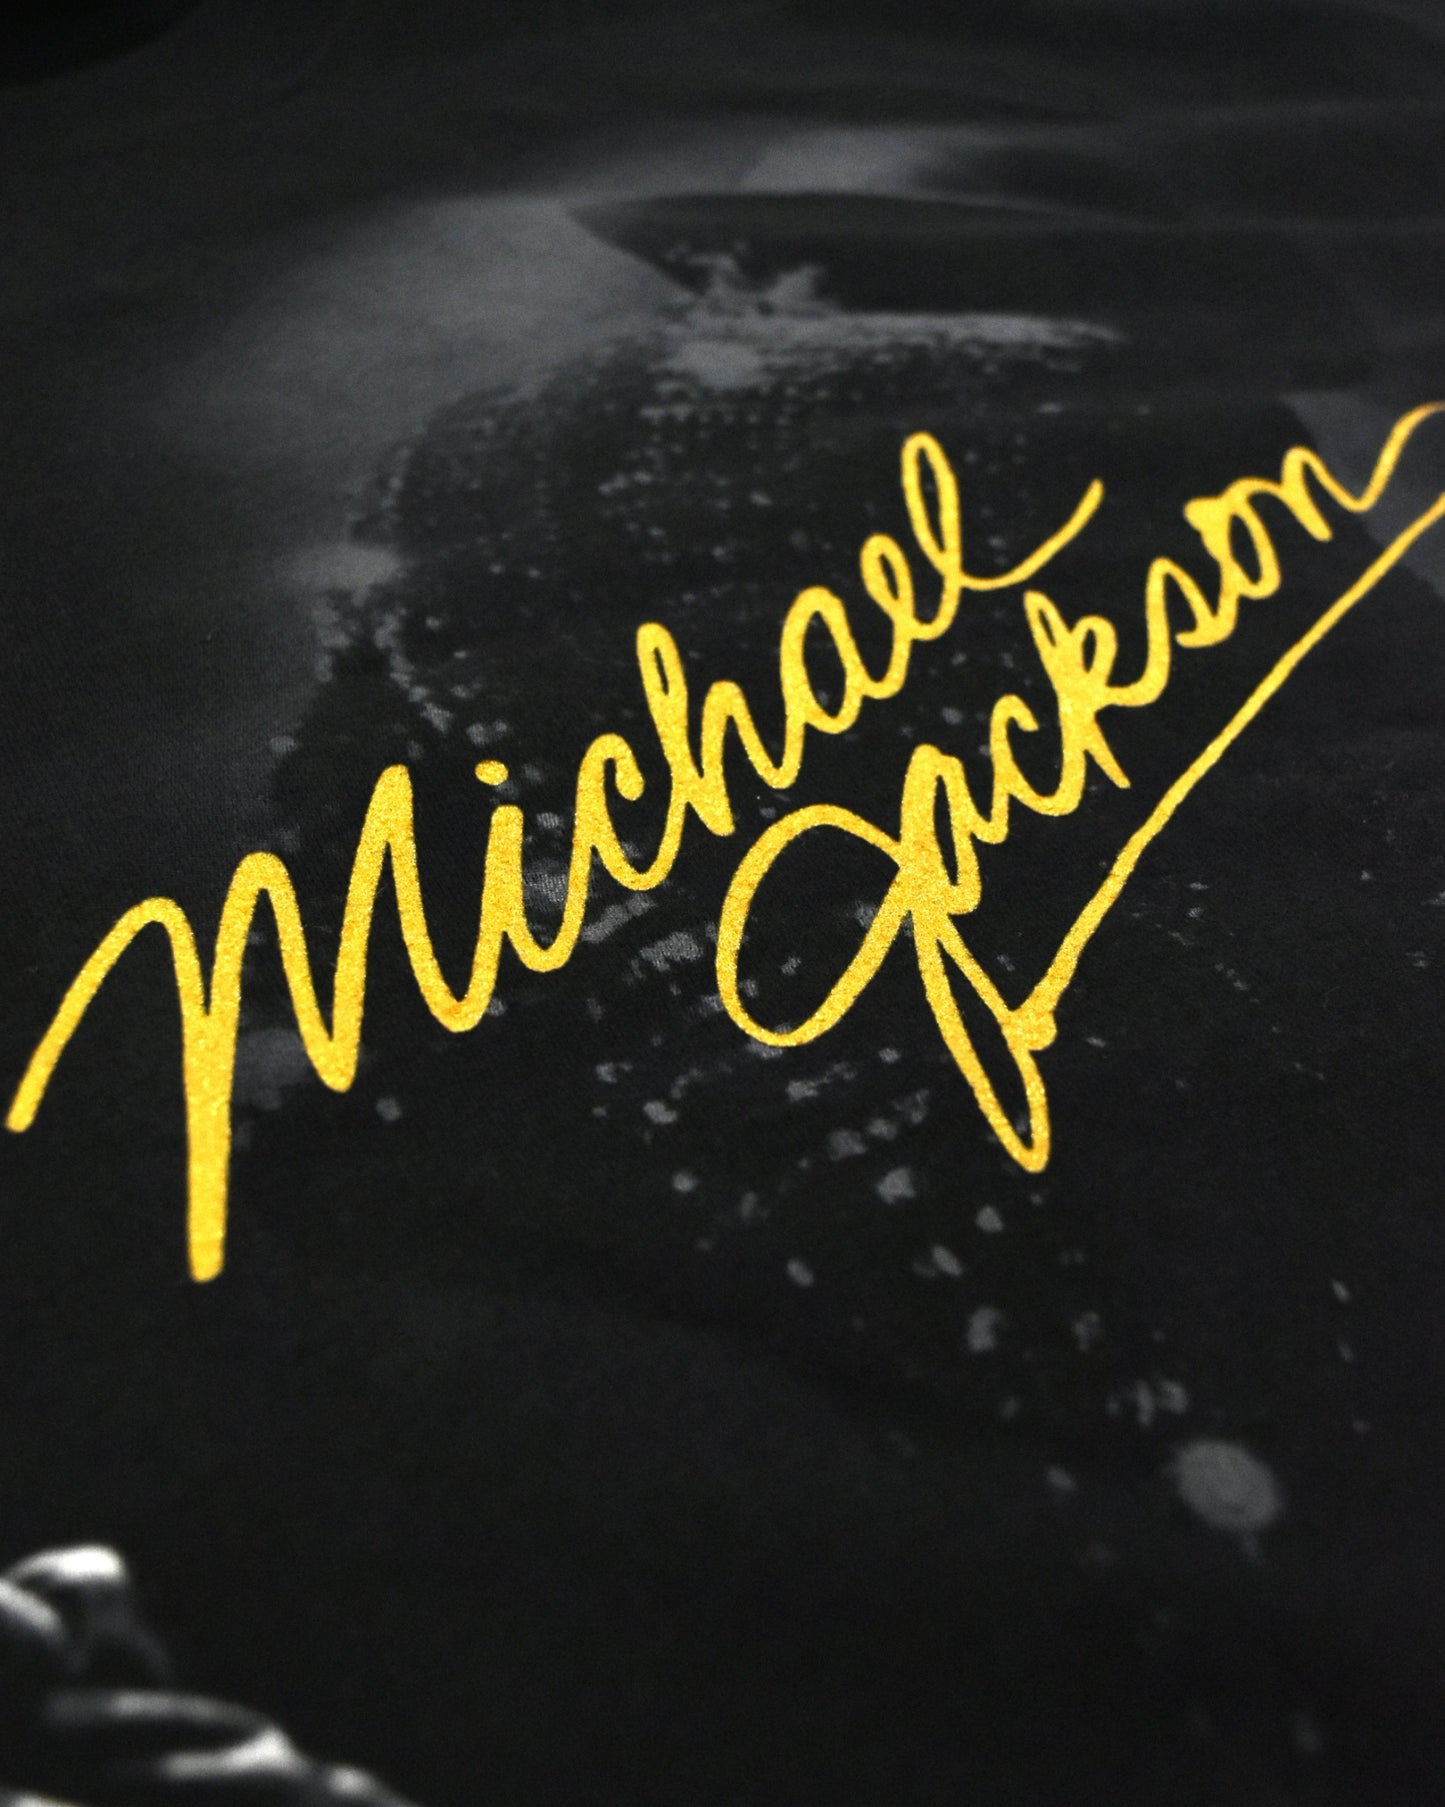 Michael Jackson pout t-shirt